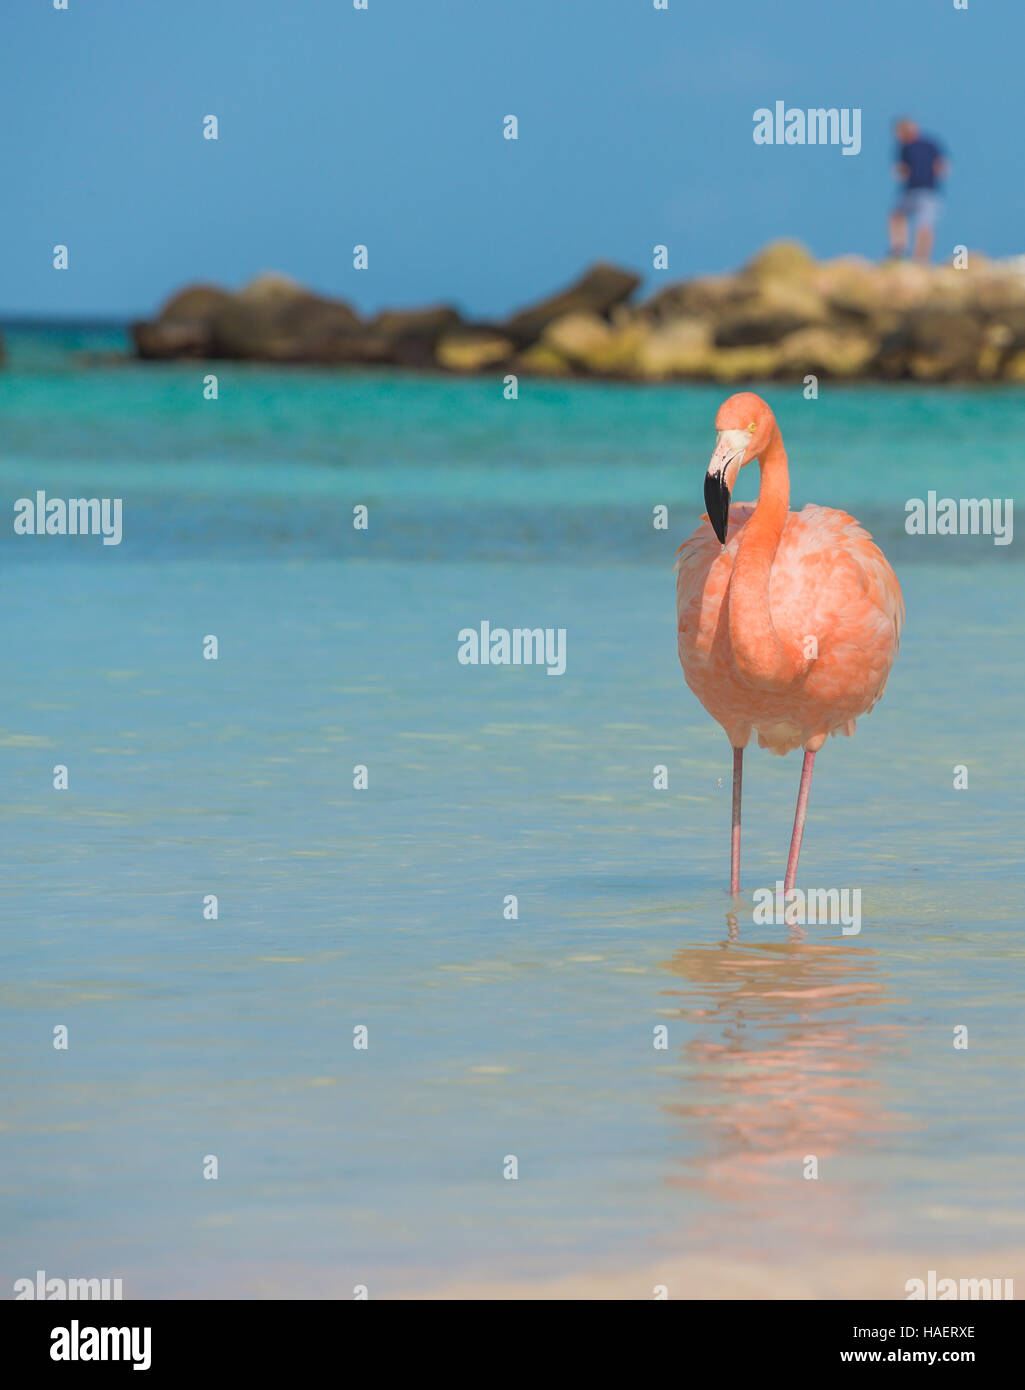 One flamingo on the beach Stock Photo